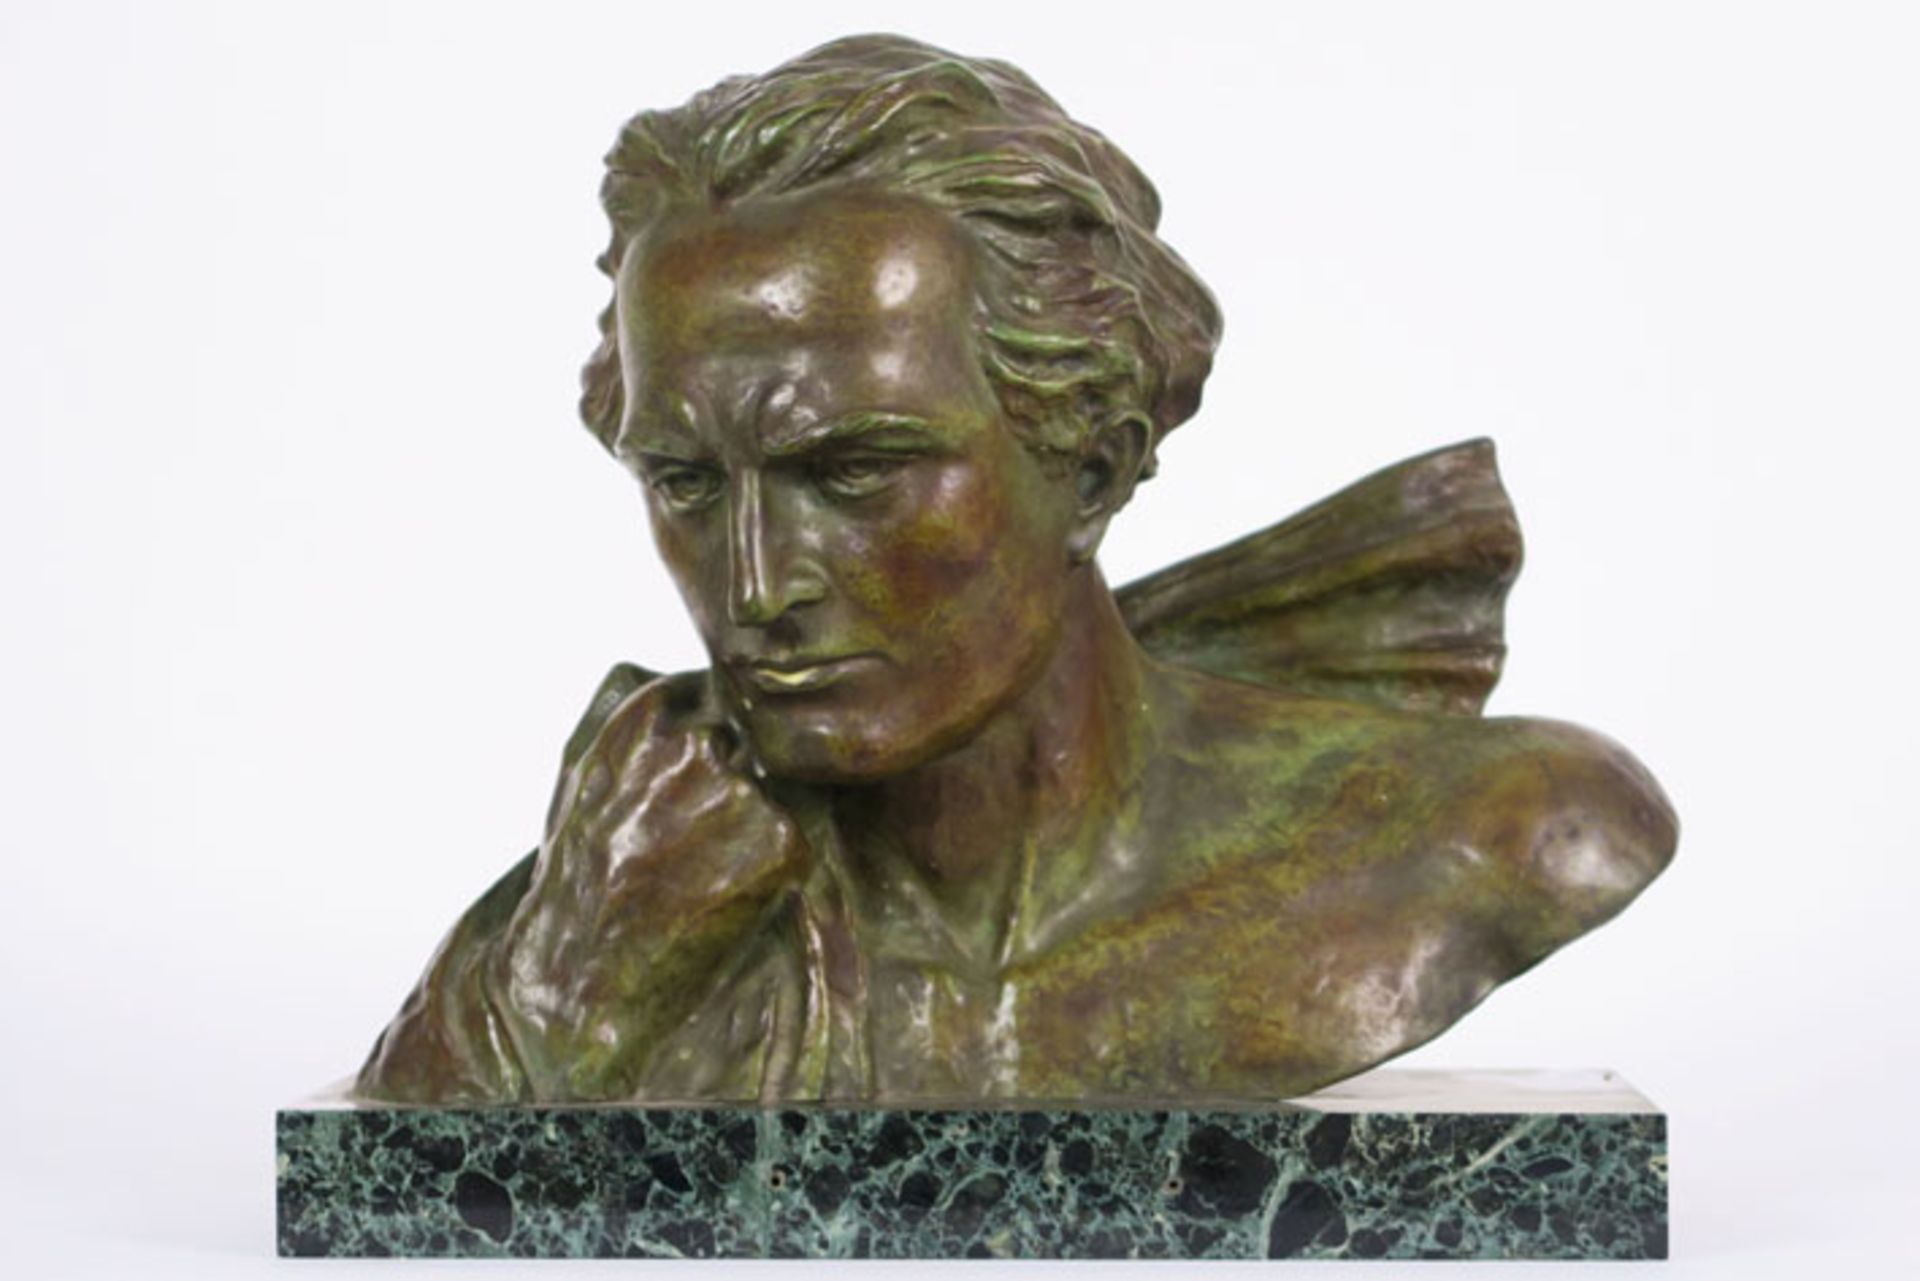 20th Cent. Belgian sculpture in bronze on marble base - signed Jan Martel - - [...]